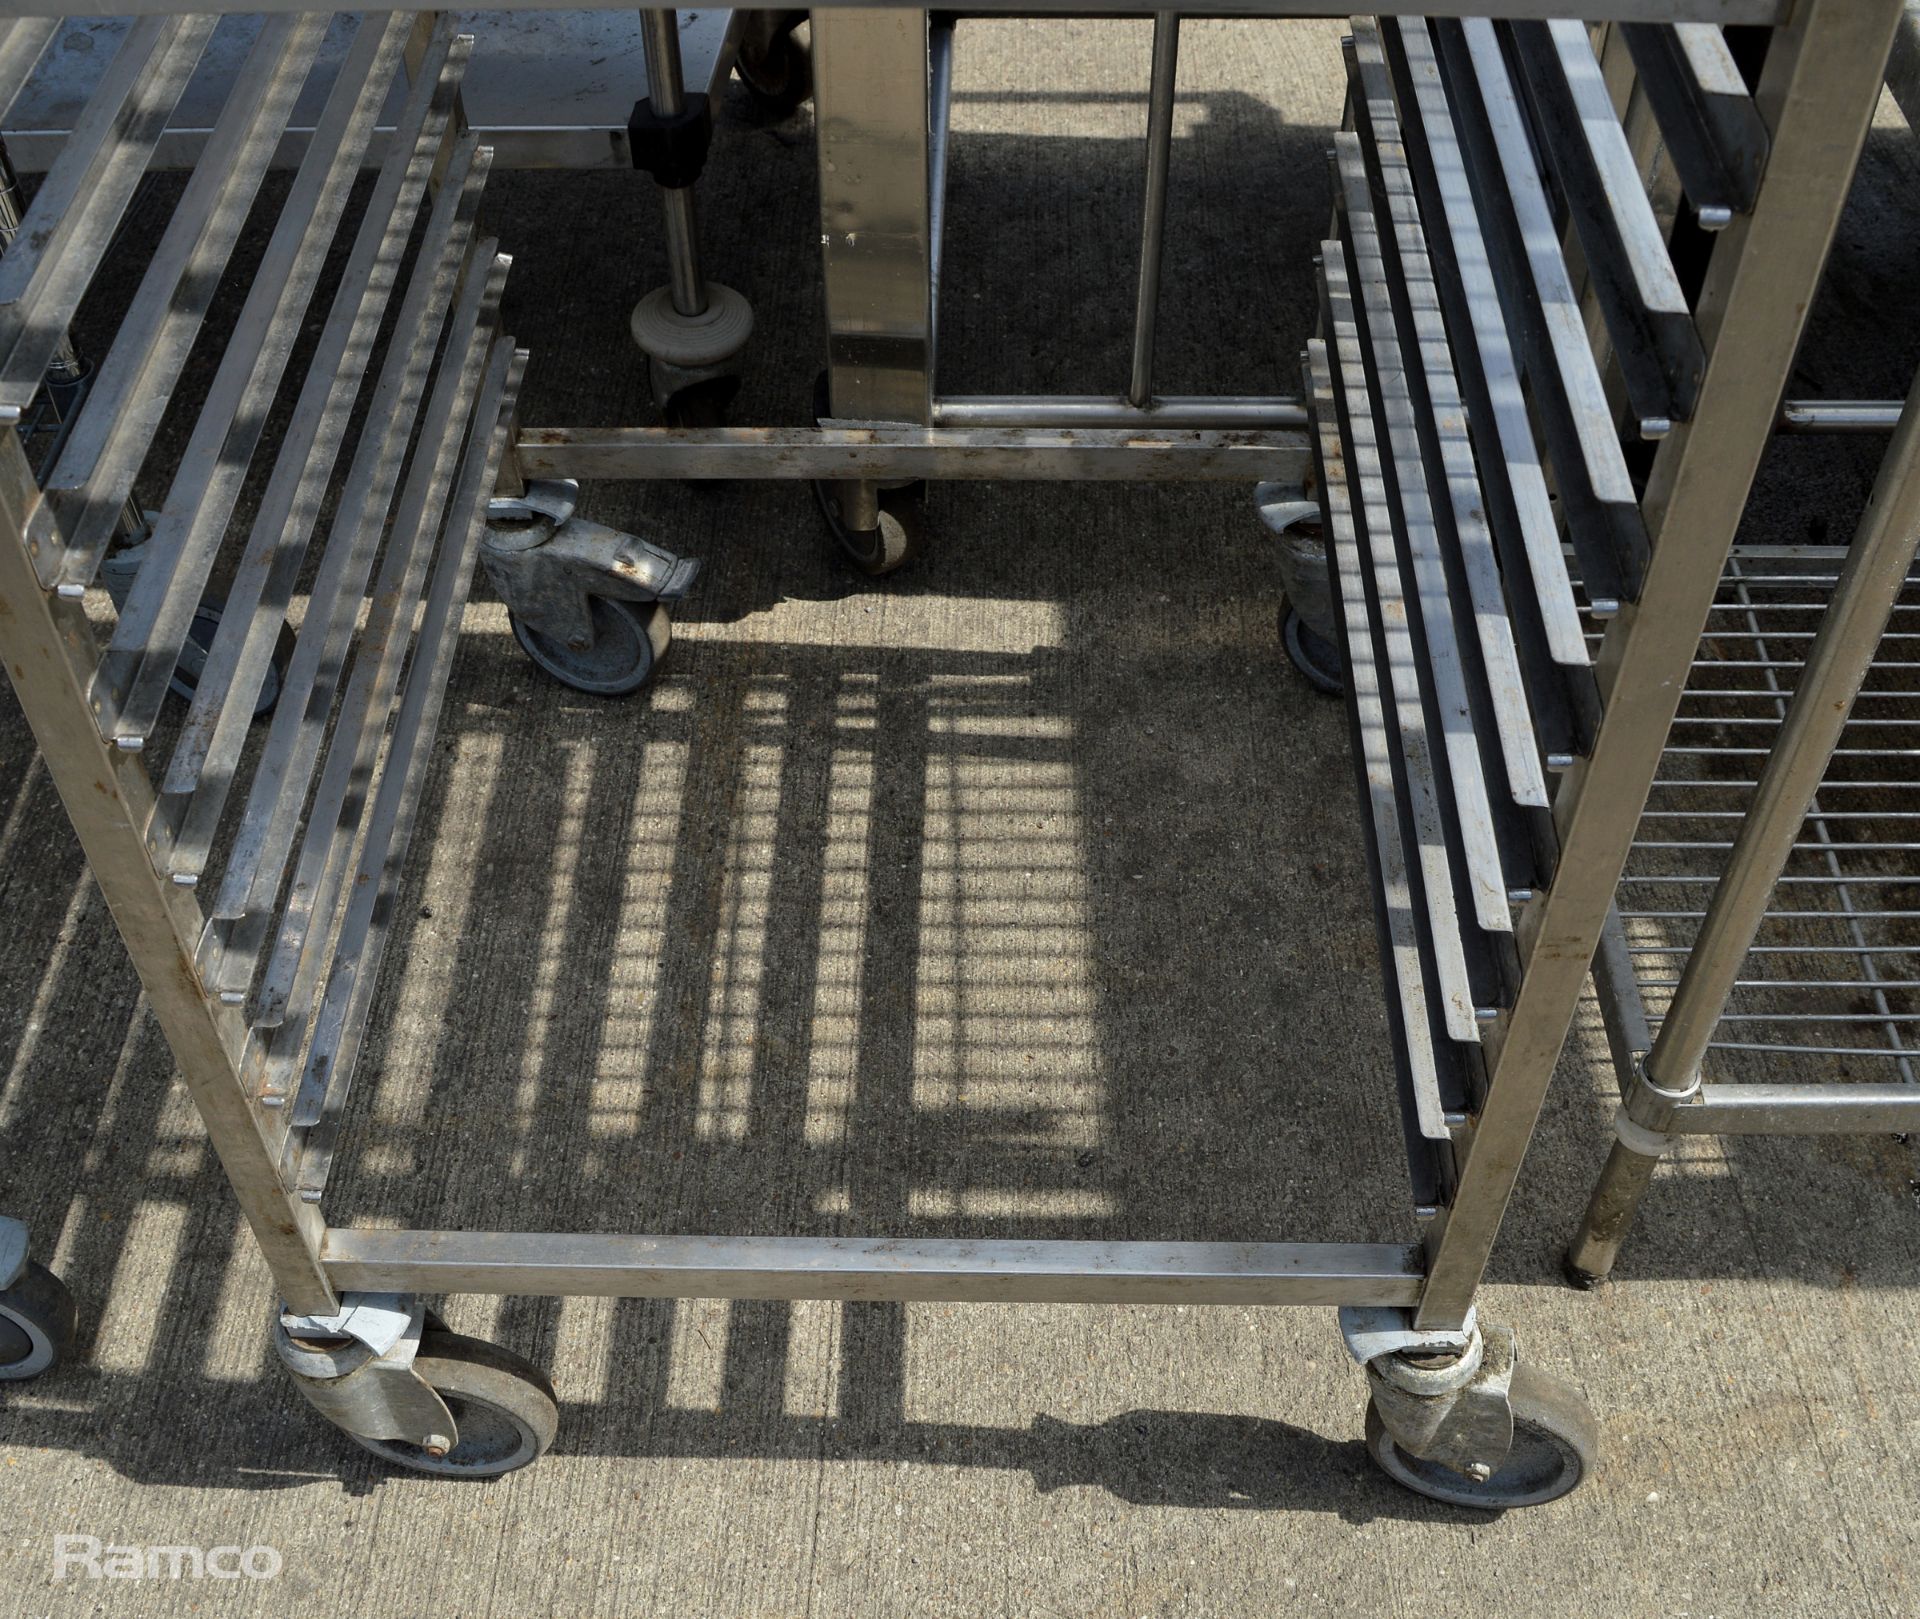 Hupfer 18 tray rack L59 x W67 x H166cm - Image 2 of 3